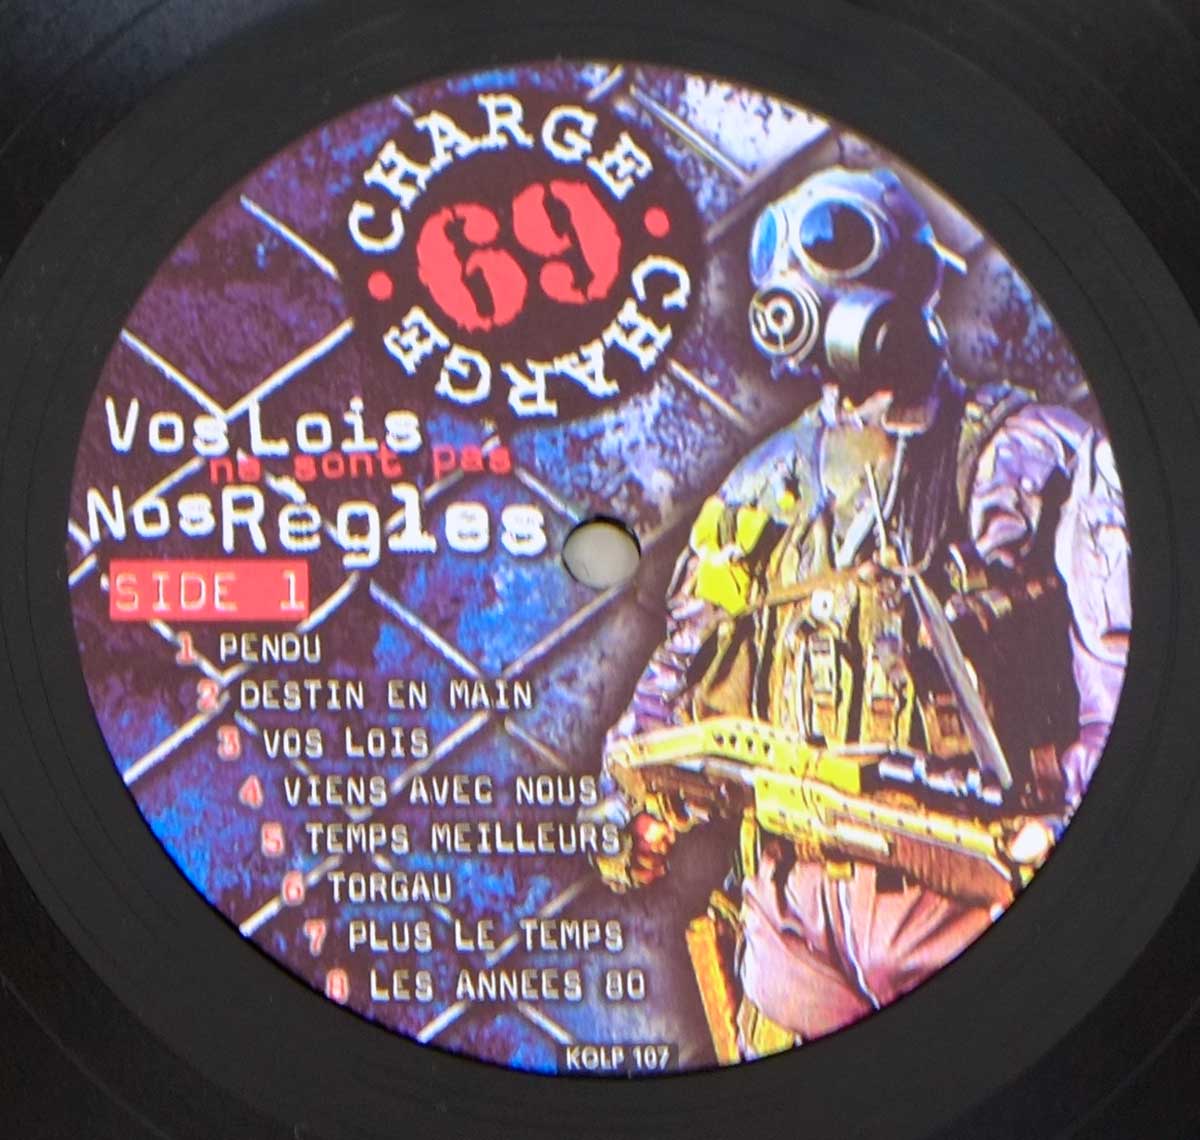 High Quality Photo of Record Label  "CHARGE 69 - Vos Lois Ne Sont Pas Nos Regles